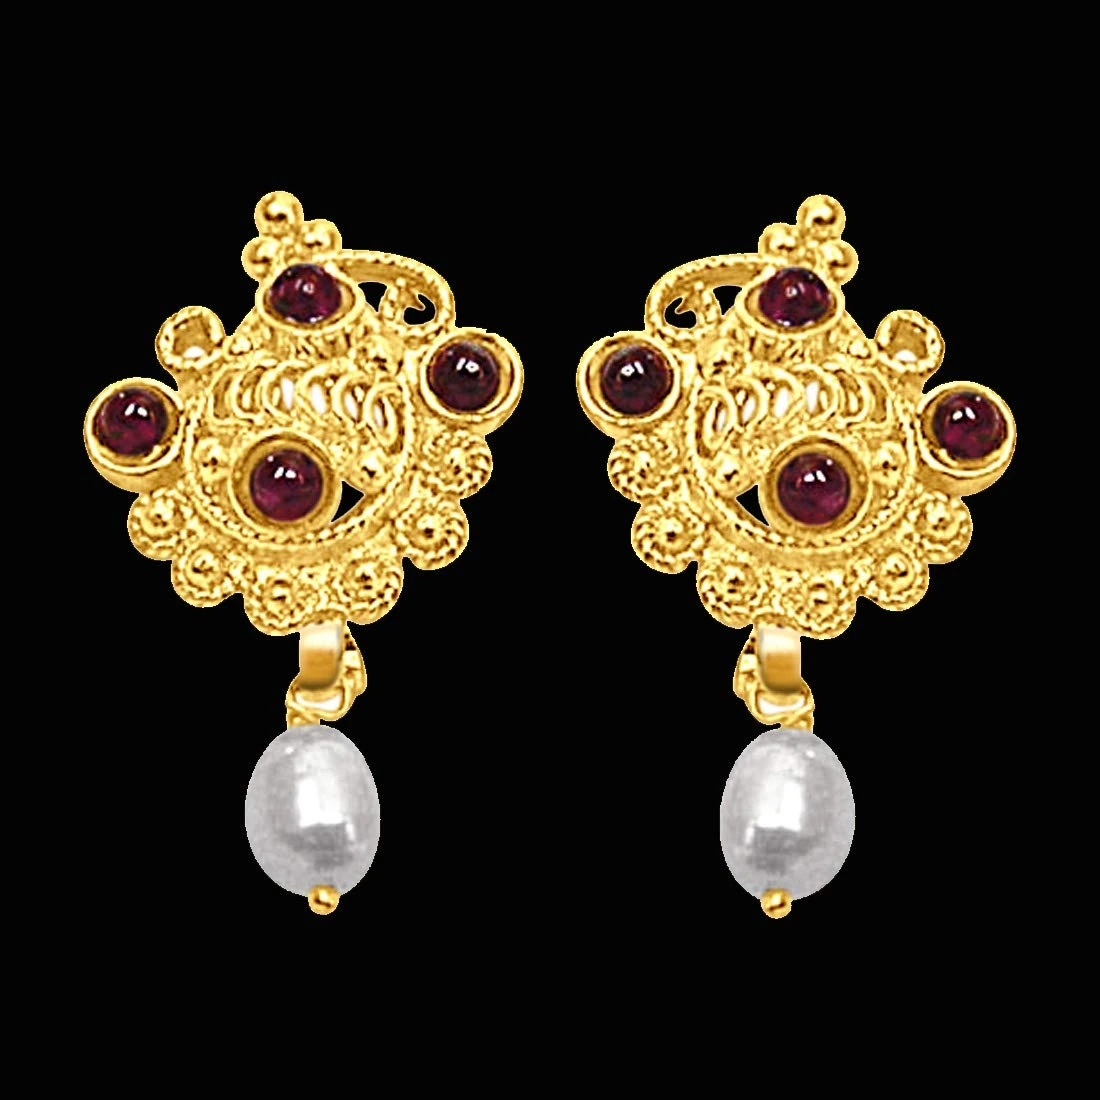 24kt Gold Plated, Freshwater Pearl & Garnet Earrings (SE141)